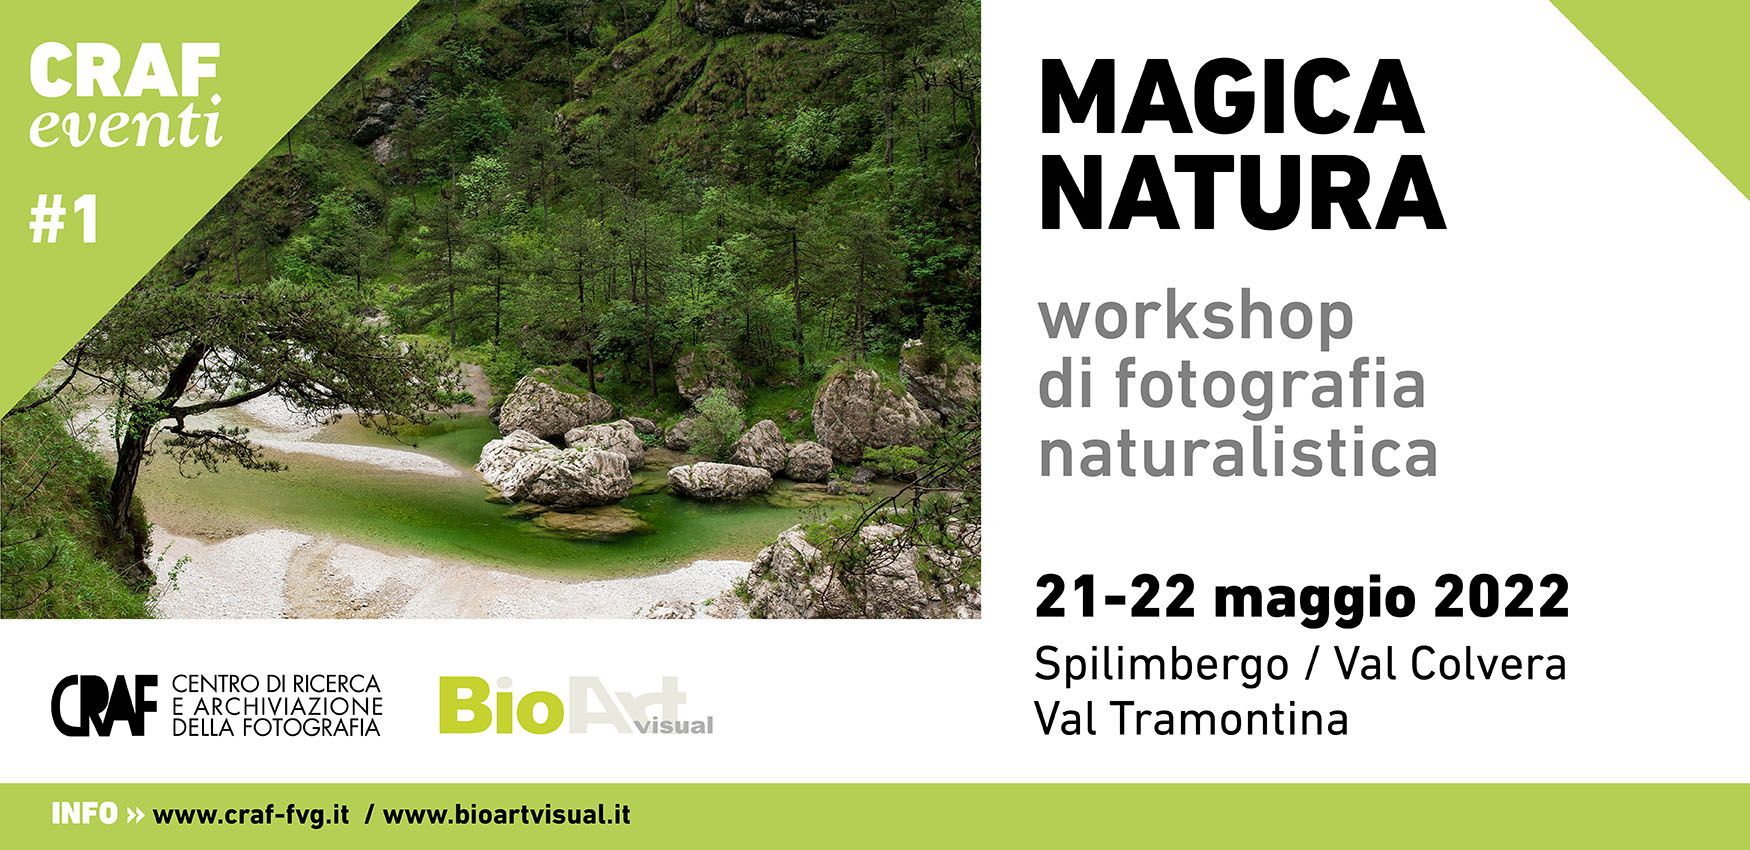 Magica Natura: workshop di fotografia naturalistica